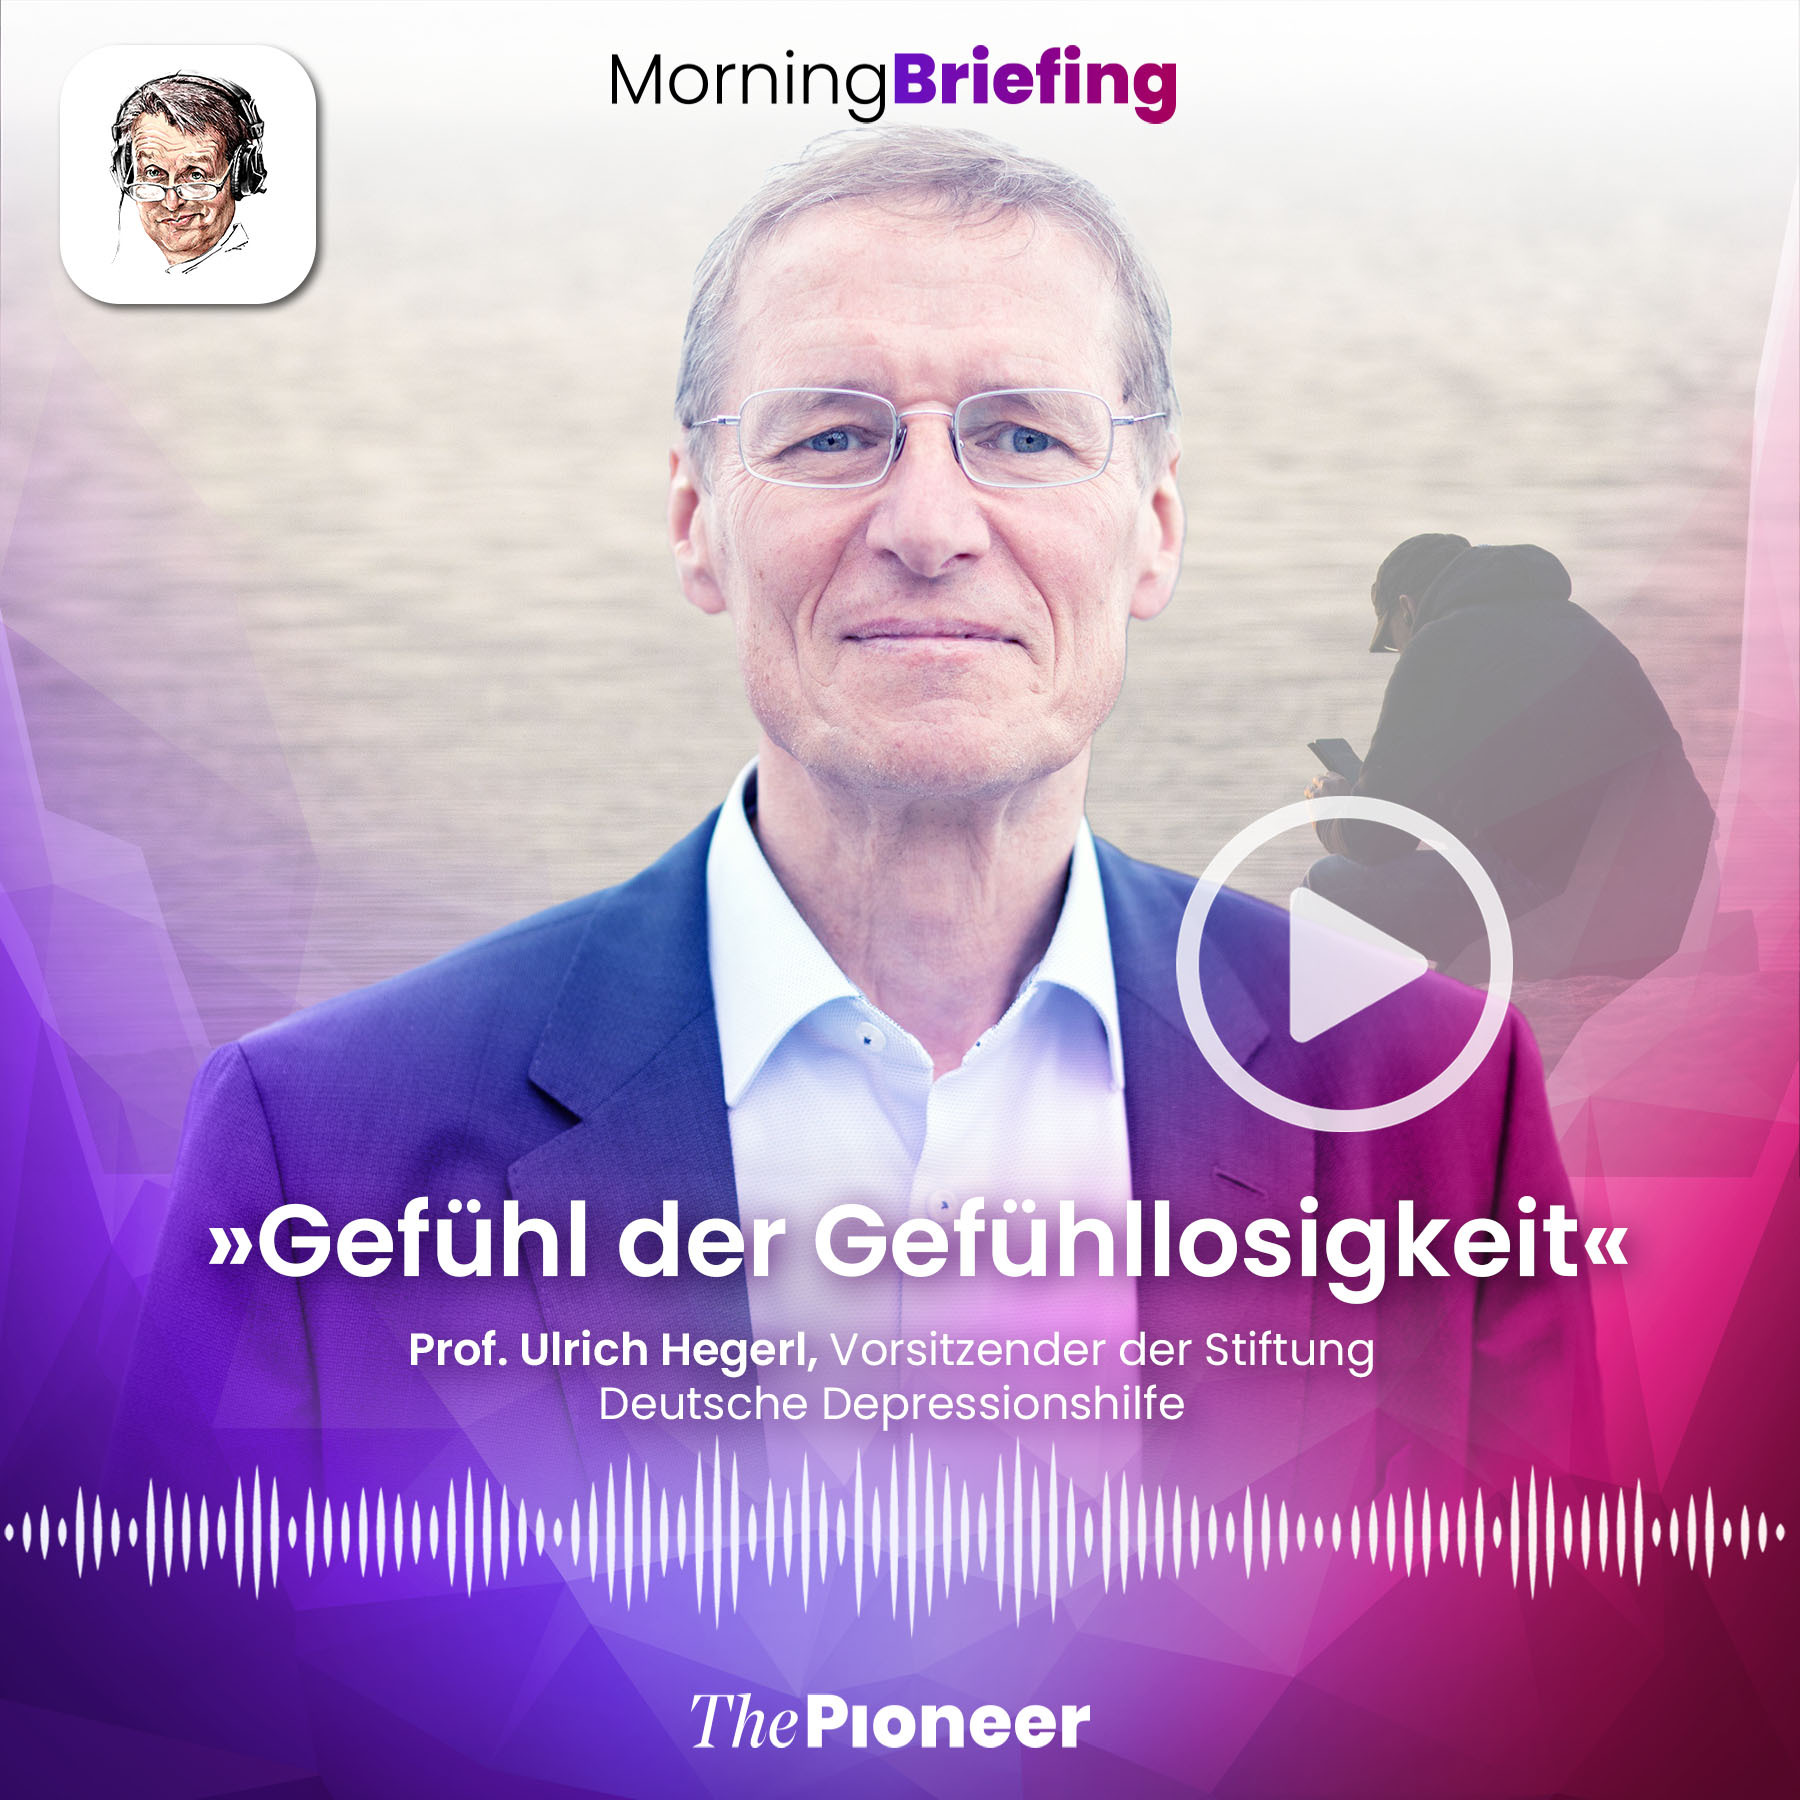 20210811-podcast-morning-briefing-media-pioneer-hegerl